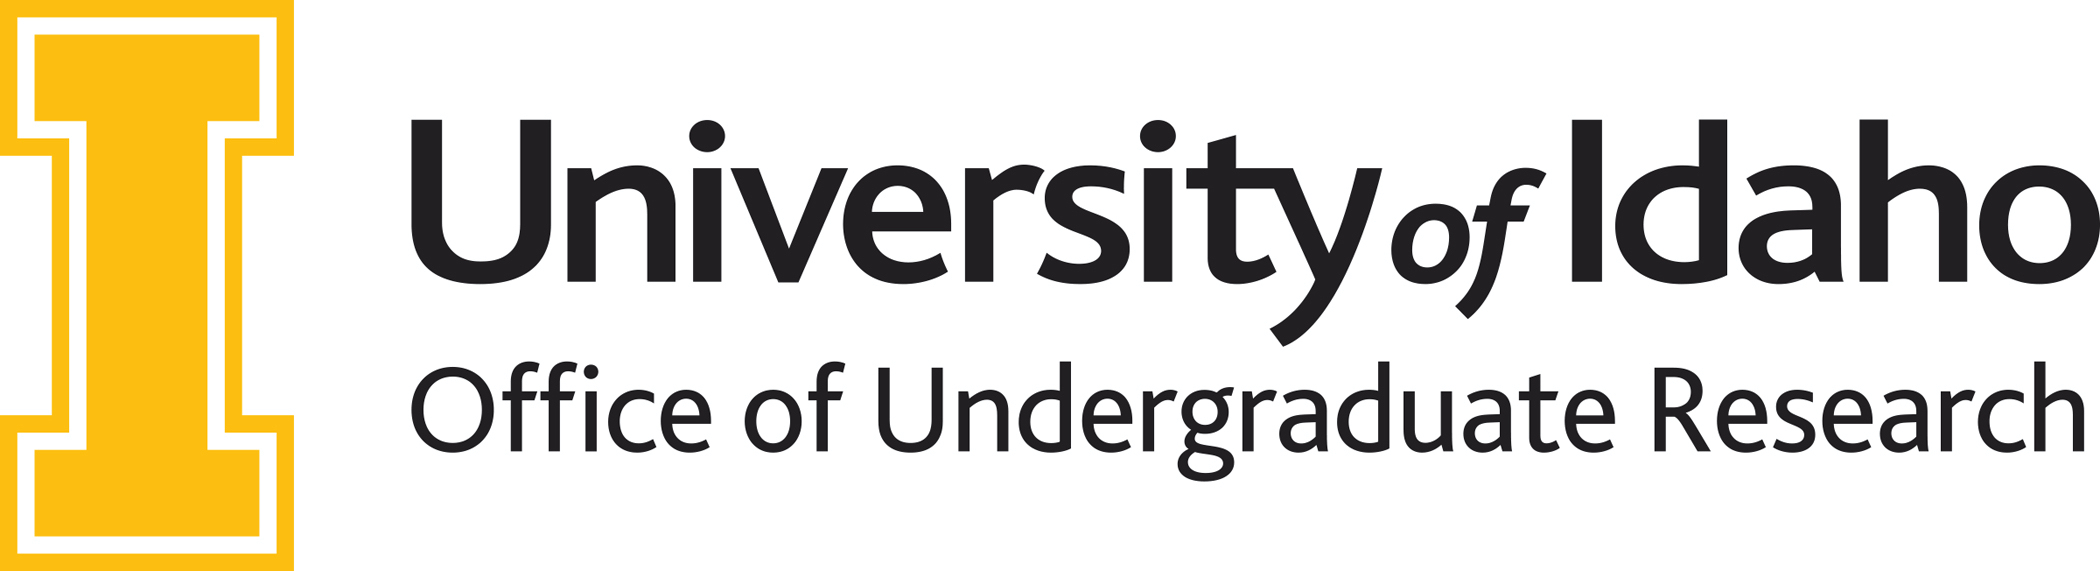 Office of Undergraduate Research Logo